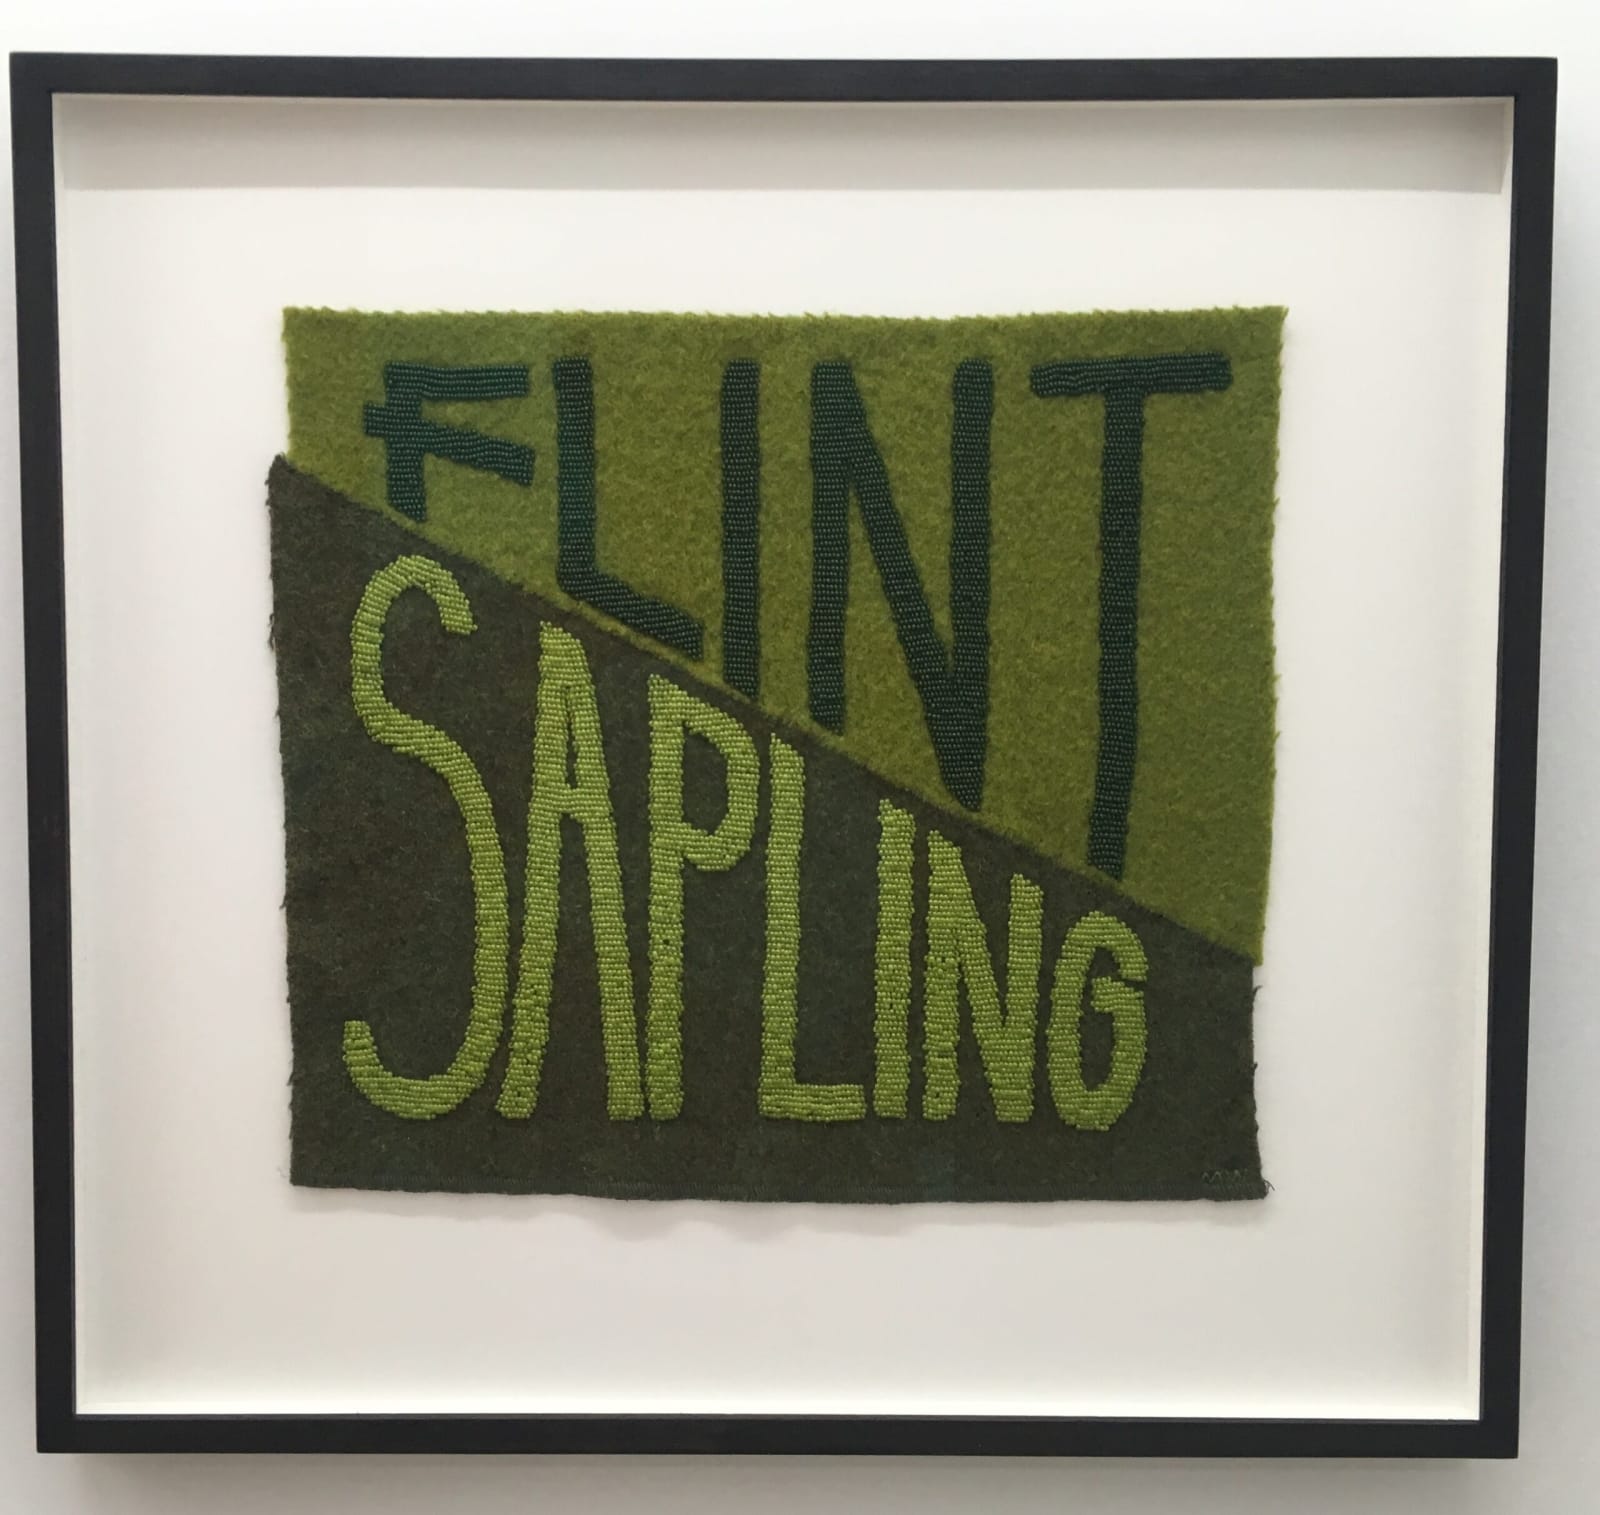 Marie Watt, Flint/Sapling, 2019